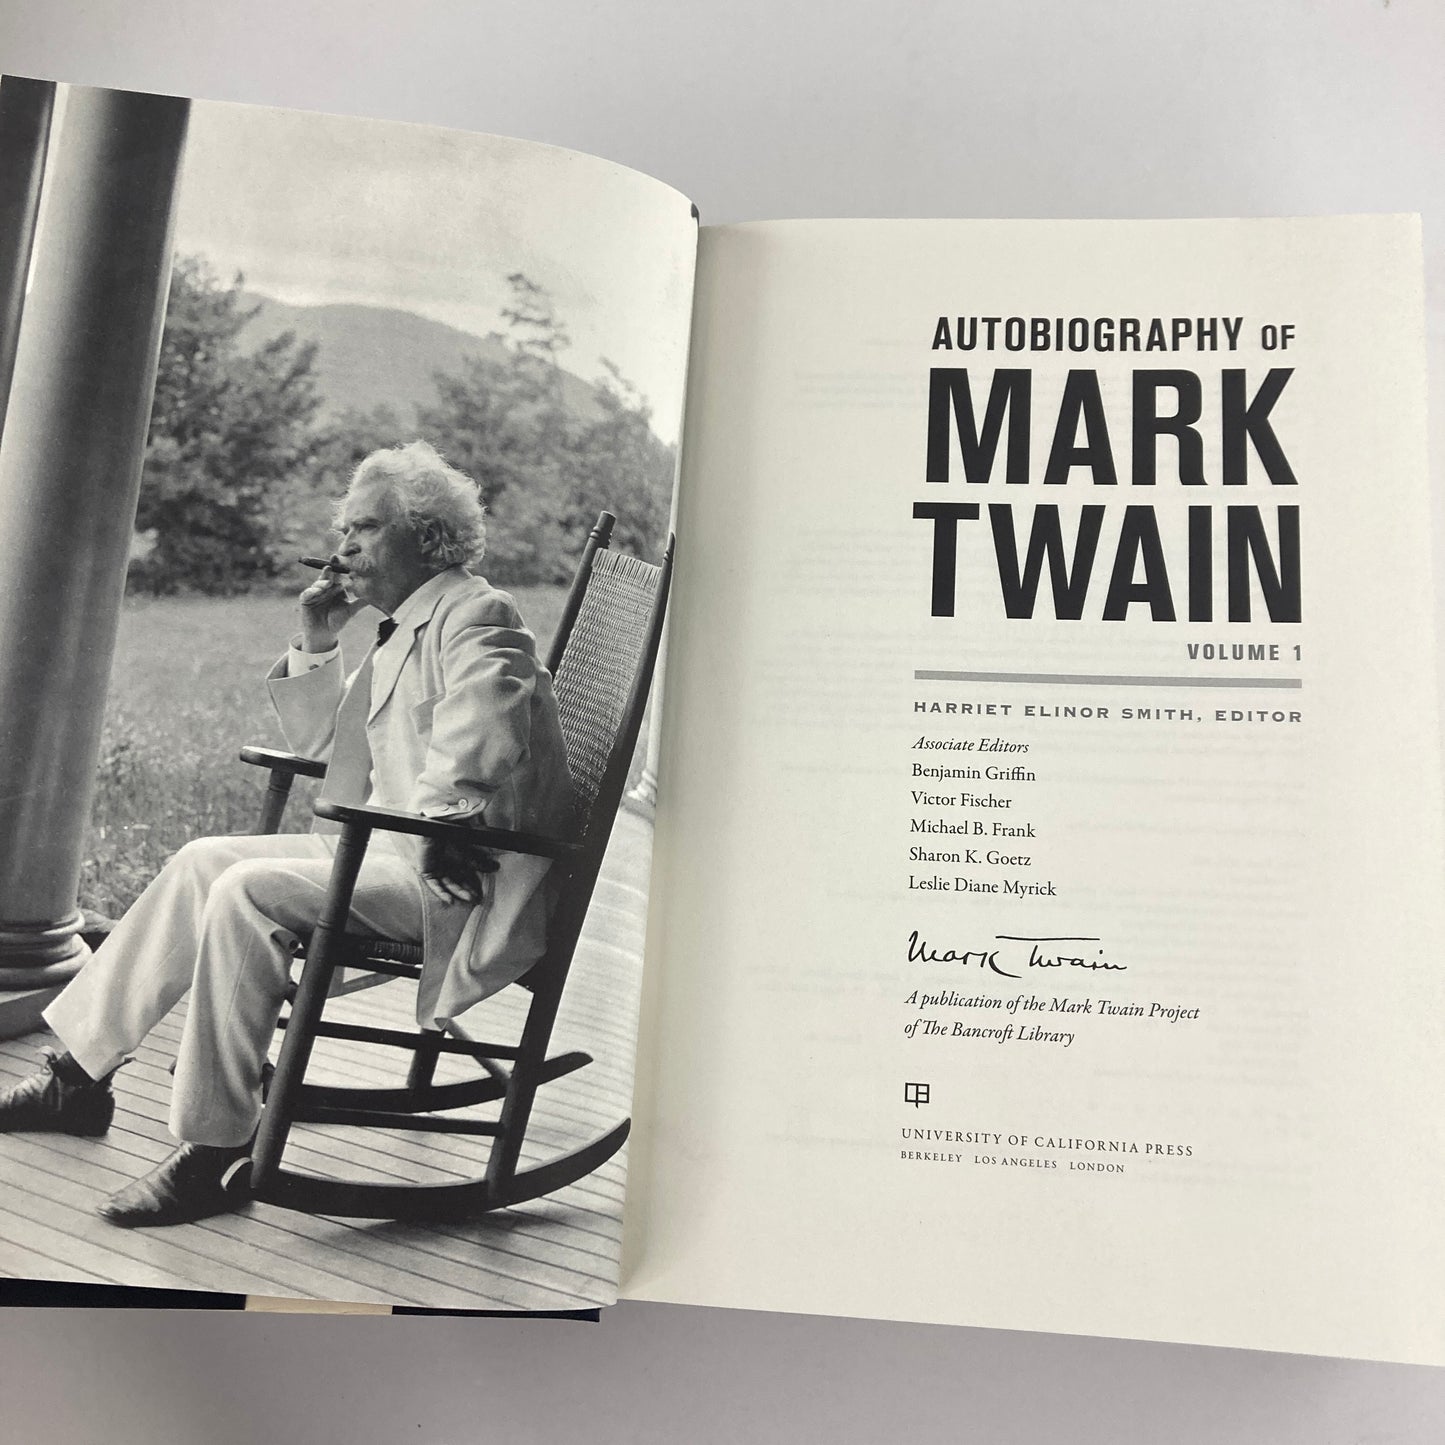 Autobiography of Mark Twain Volume 1